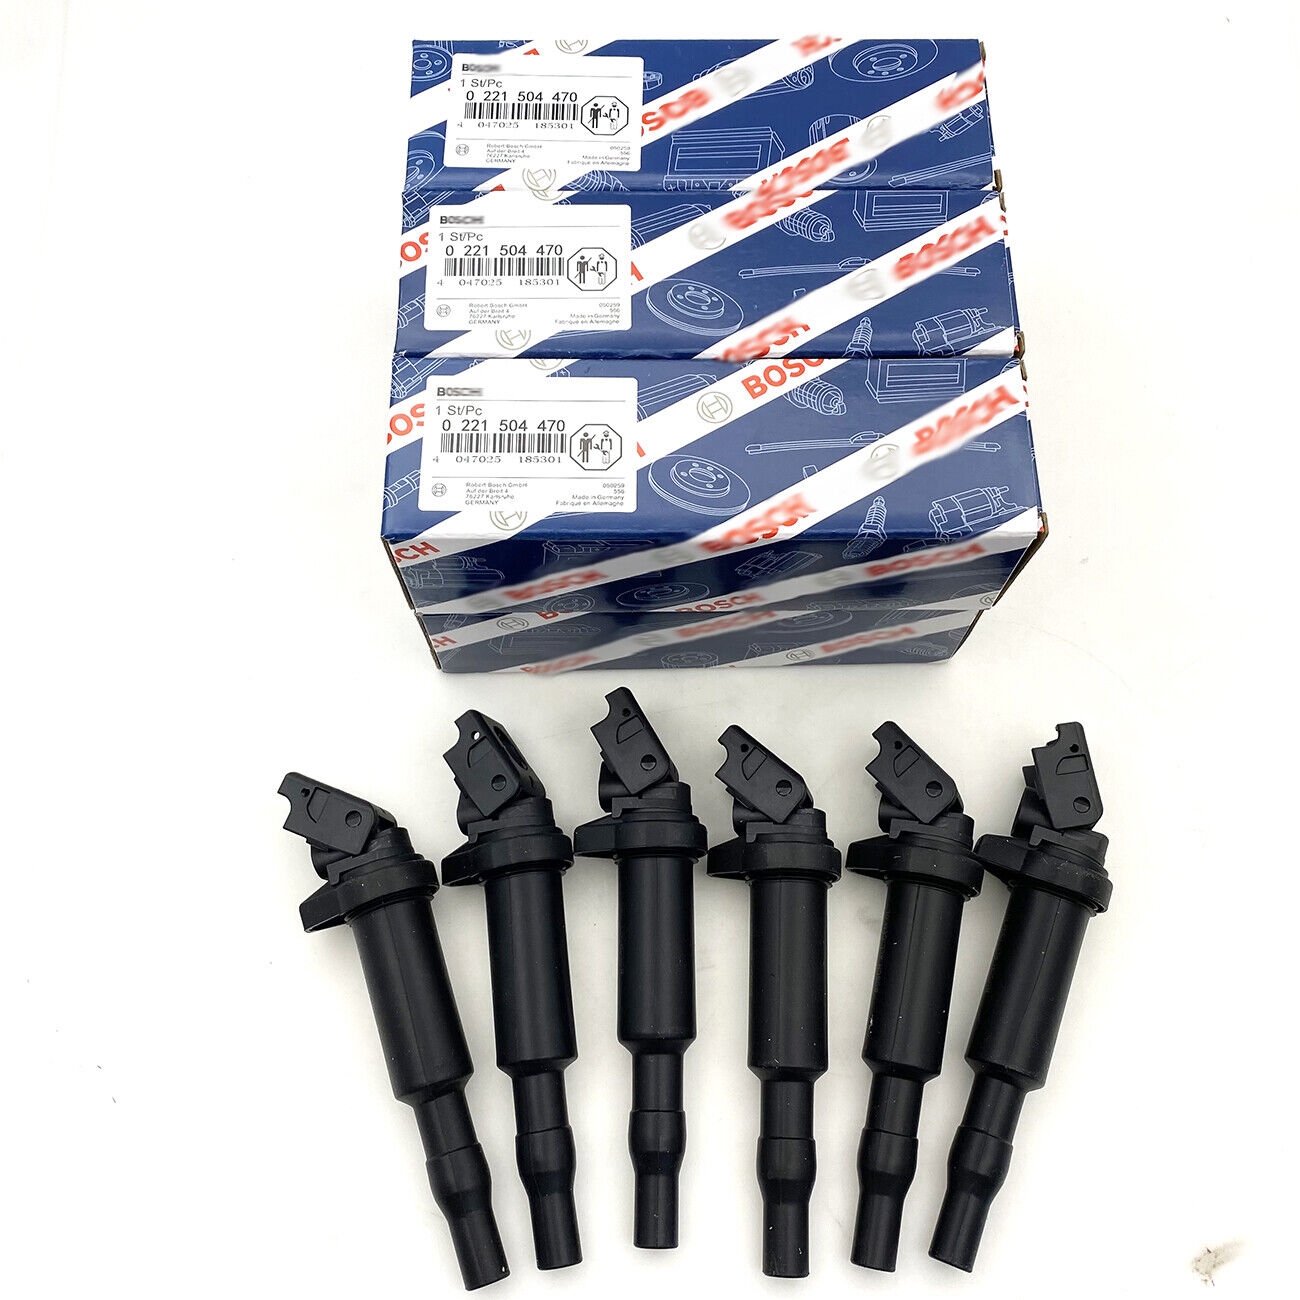 6PCS Ignition Coils Fits For BMW 3 5 Series x3 x5 z4 325i 328i UF592 0221504470